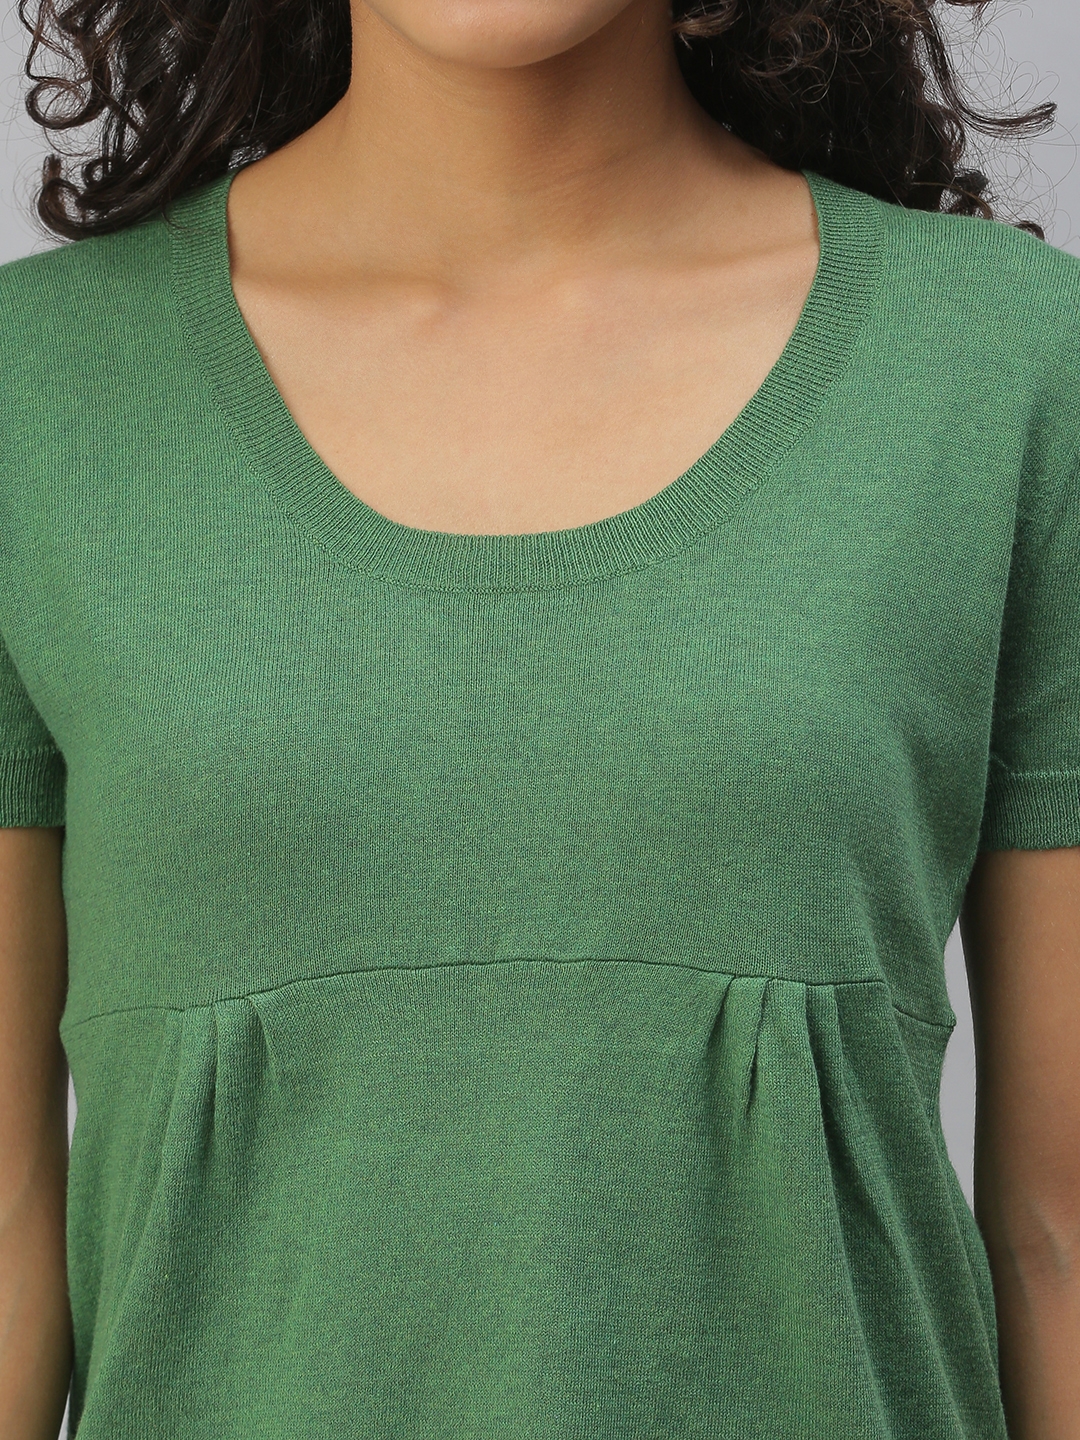 Women's Green Cotton Blend Solid Tops